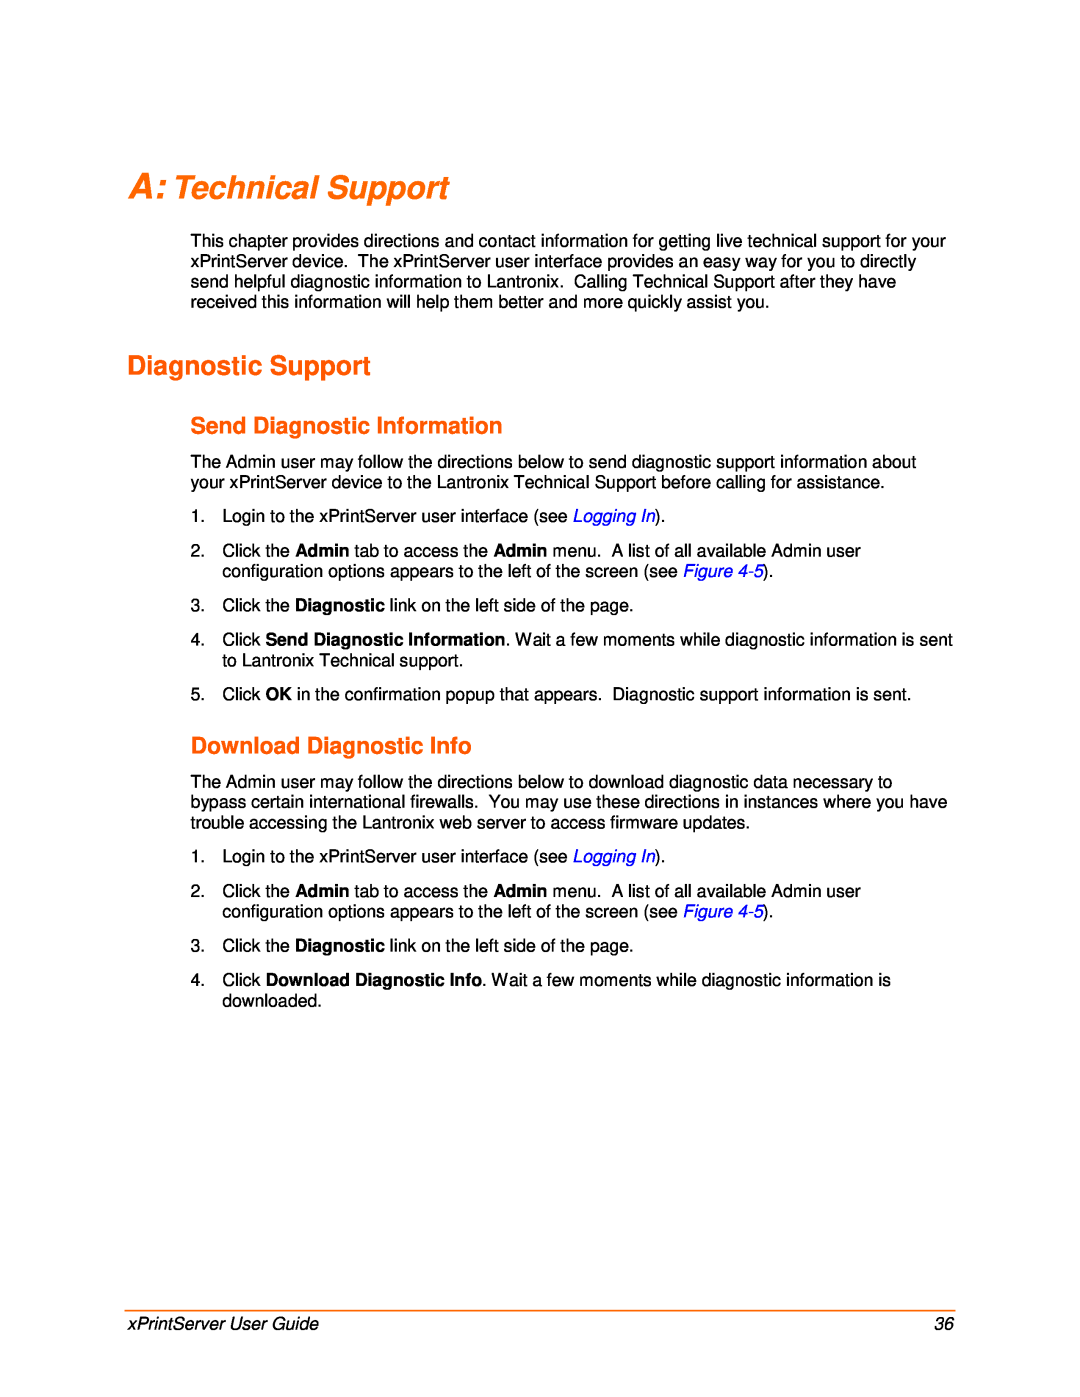 Lantronix 900-603 manual A Technical Support, Diagnostic Support, Send Diagnostic Information, Download Diagnostic Info 